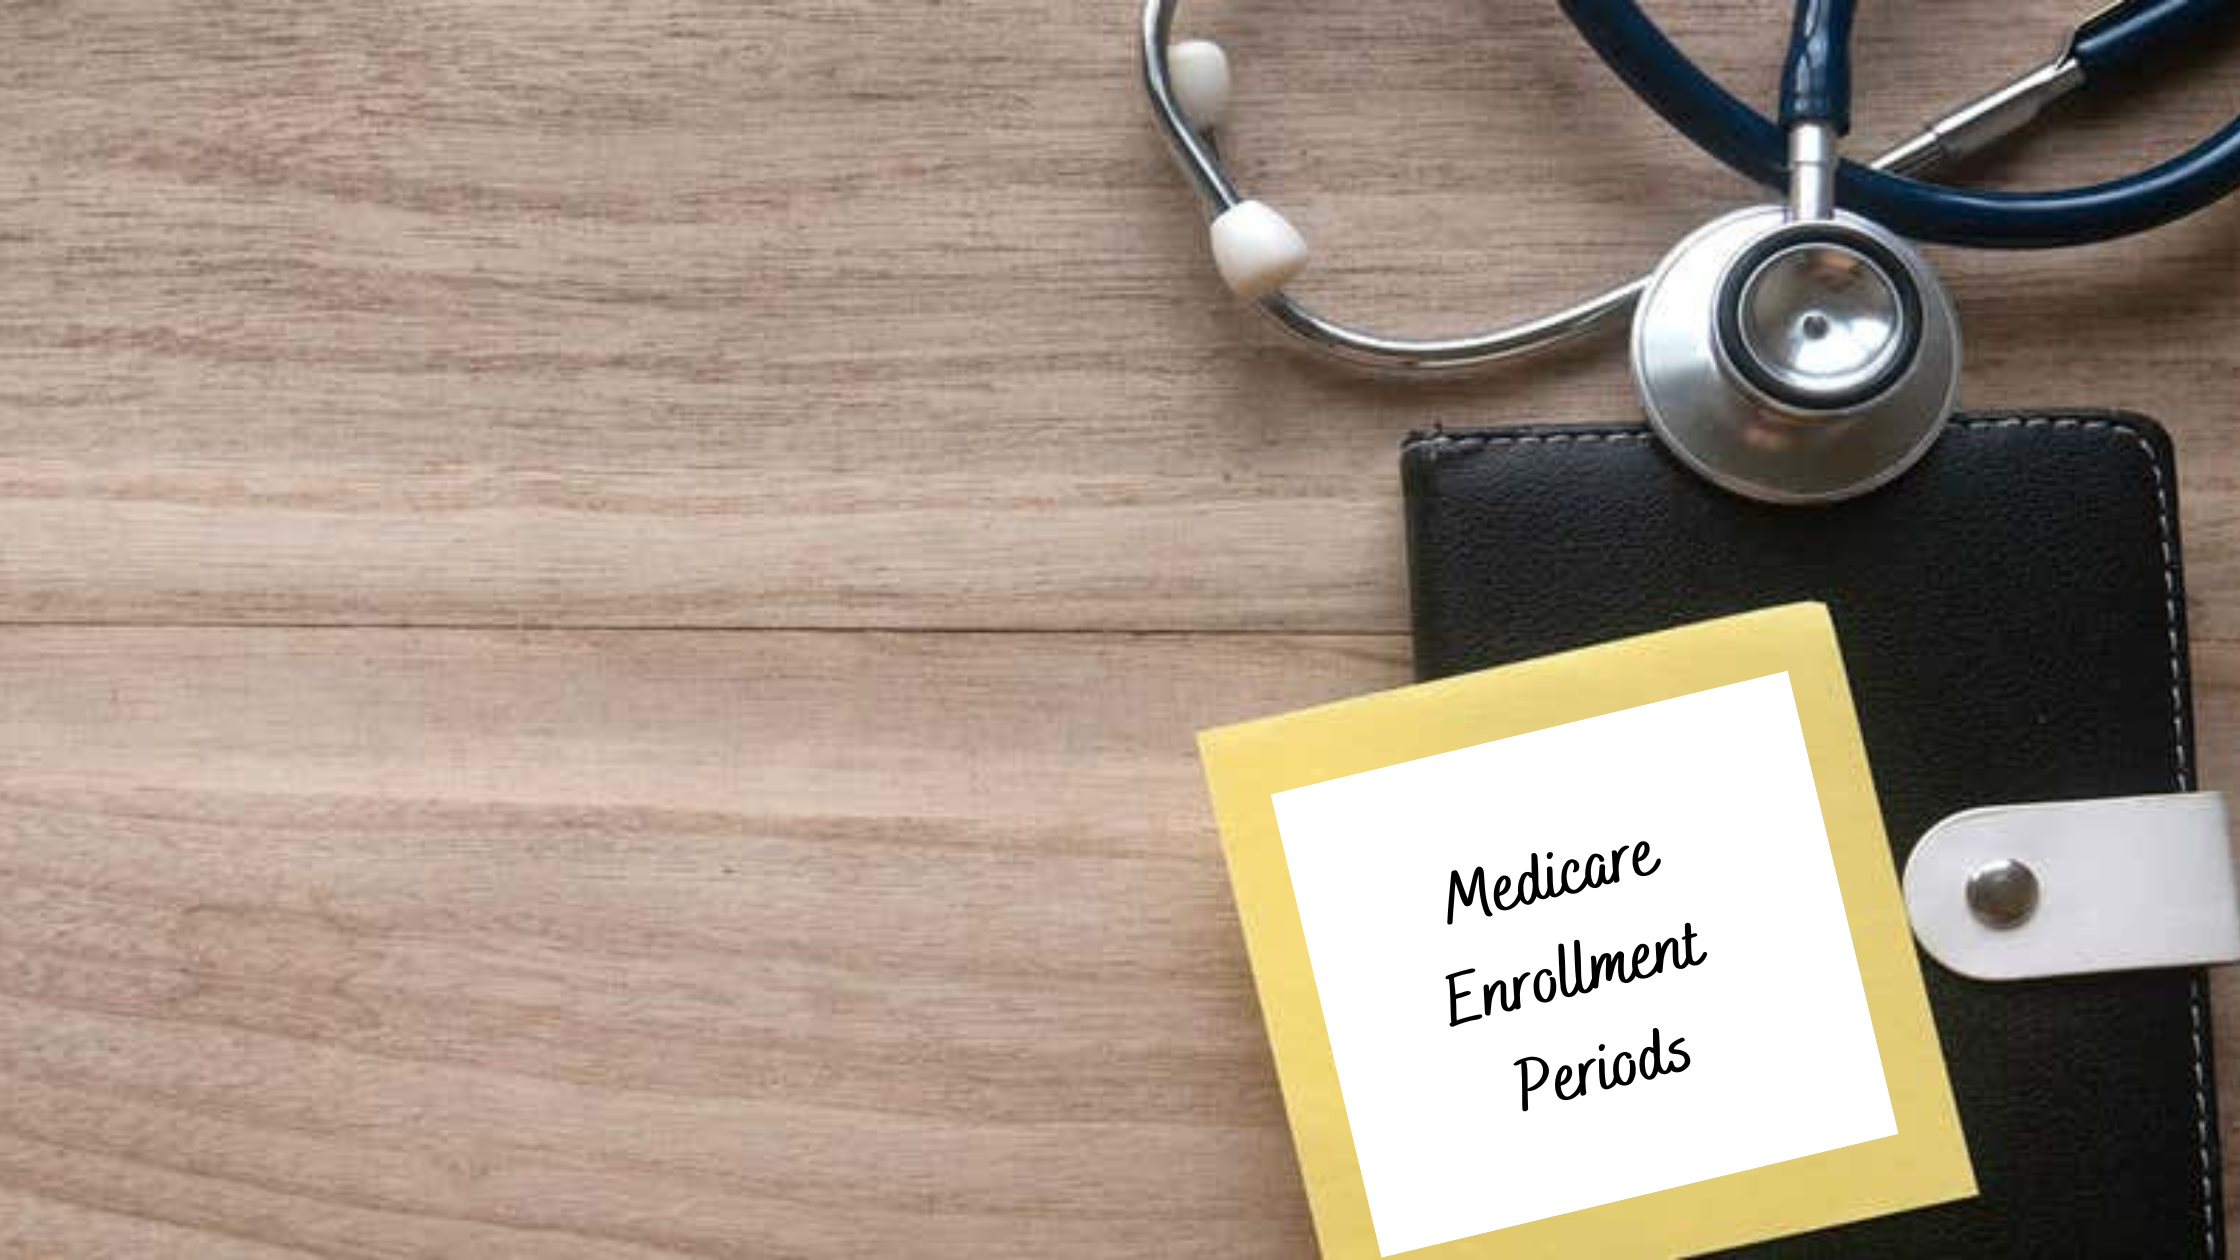 Medicare Enrollment Periods stock image